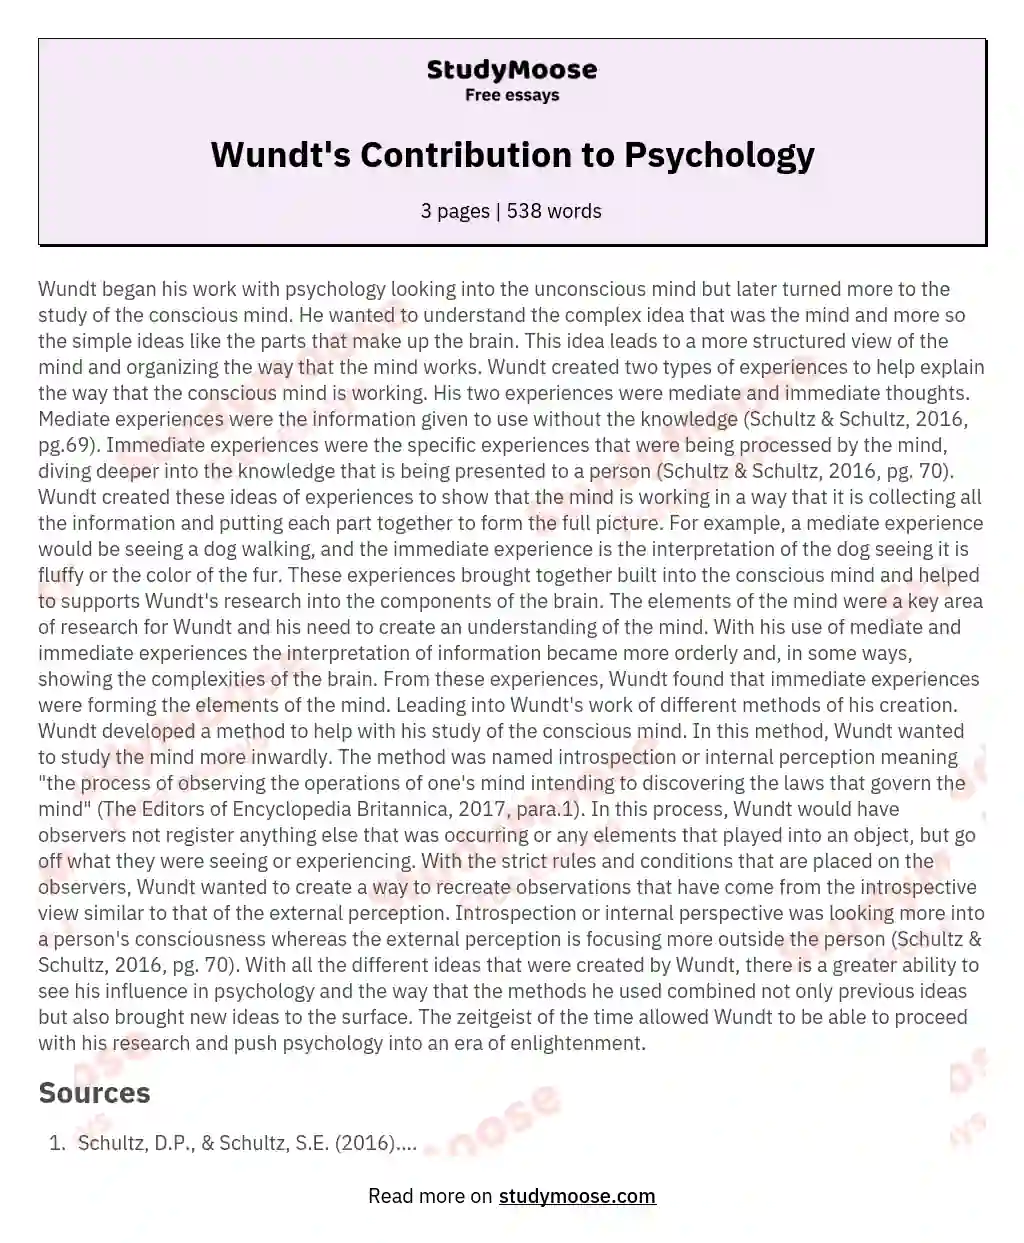 Wundt's Contribution to Psychology